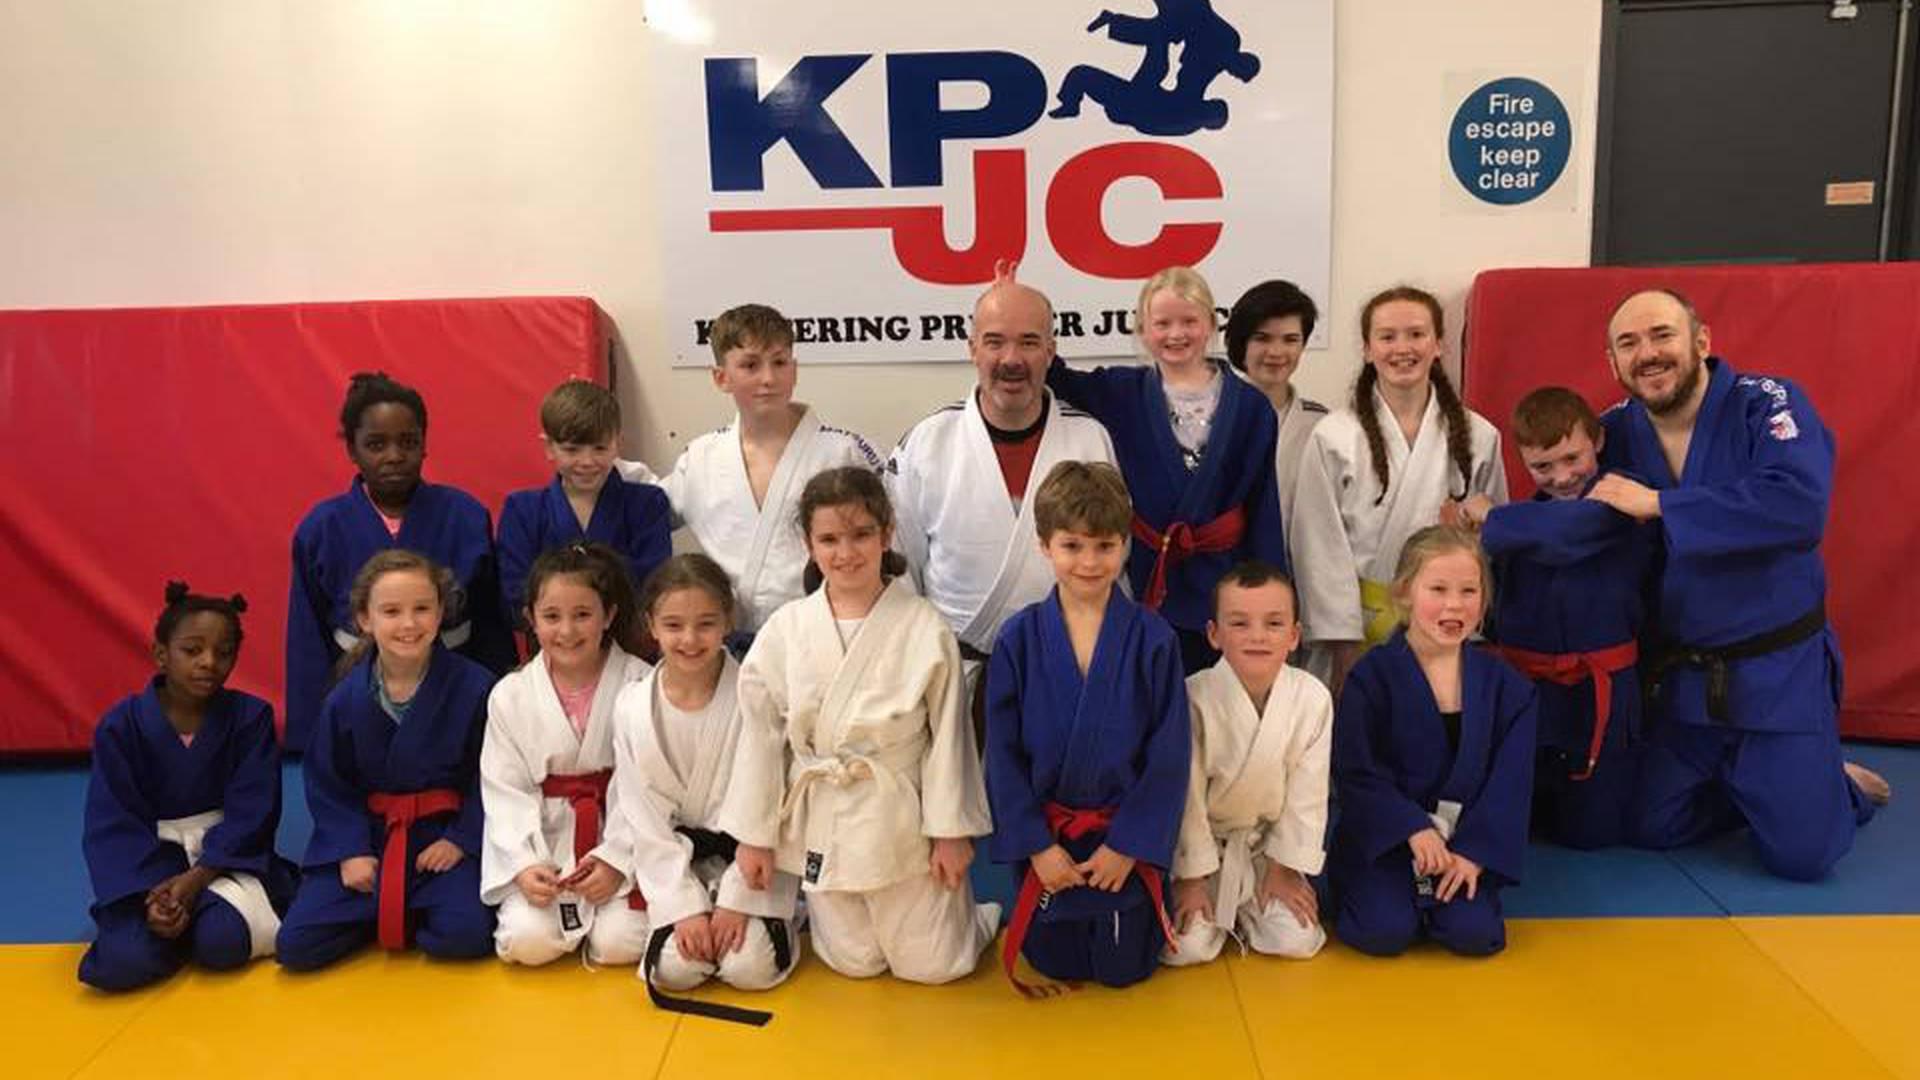 Kettering Premier Judo Club photo